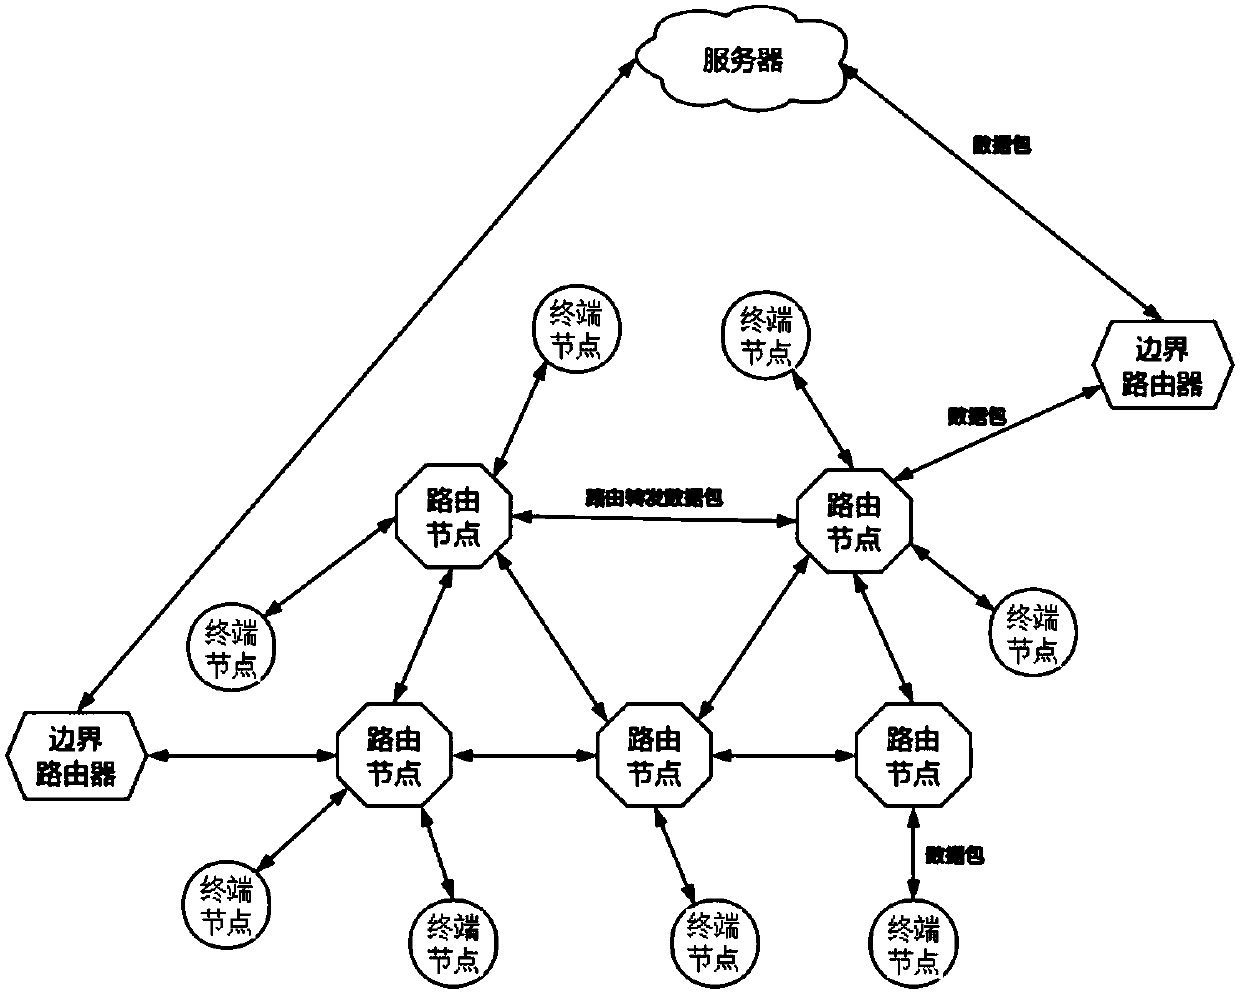 A networking method of mesh wireless sensor network based on Thread protocol